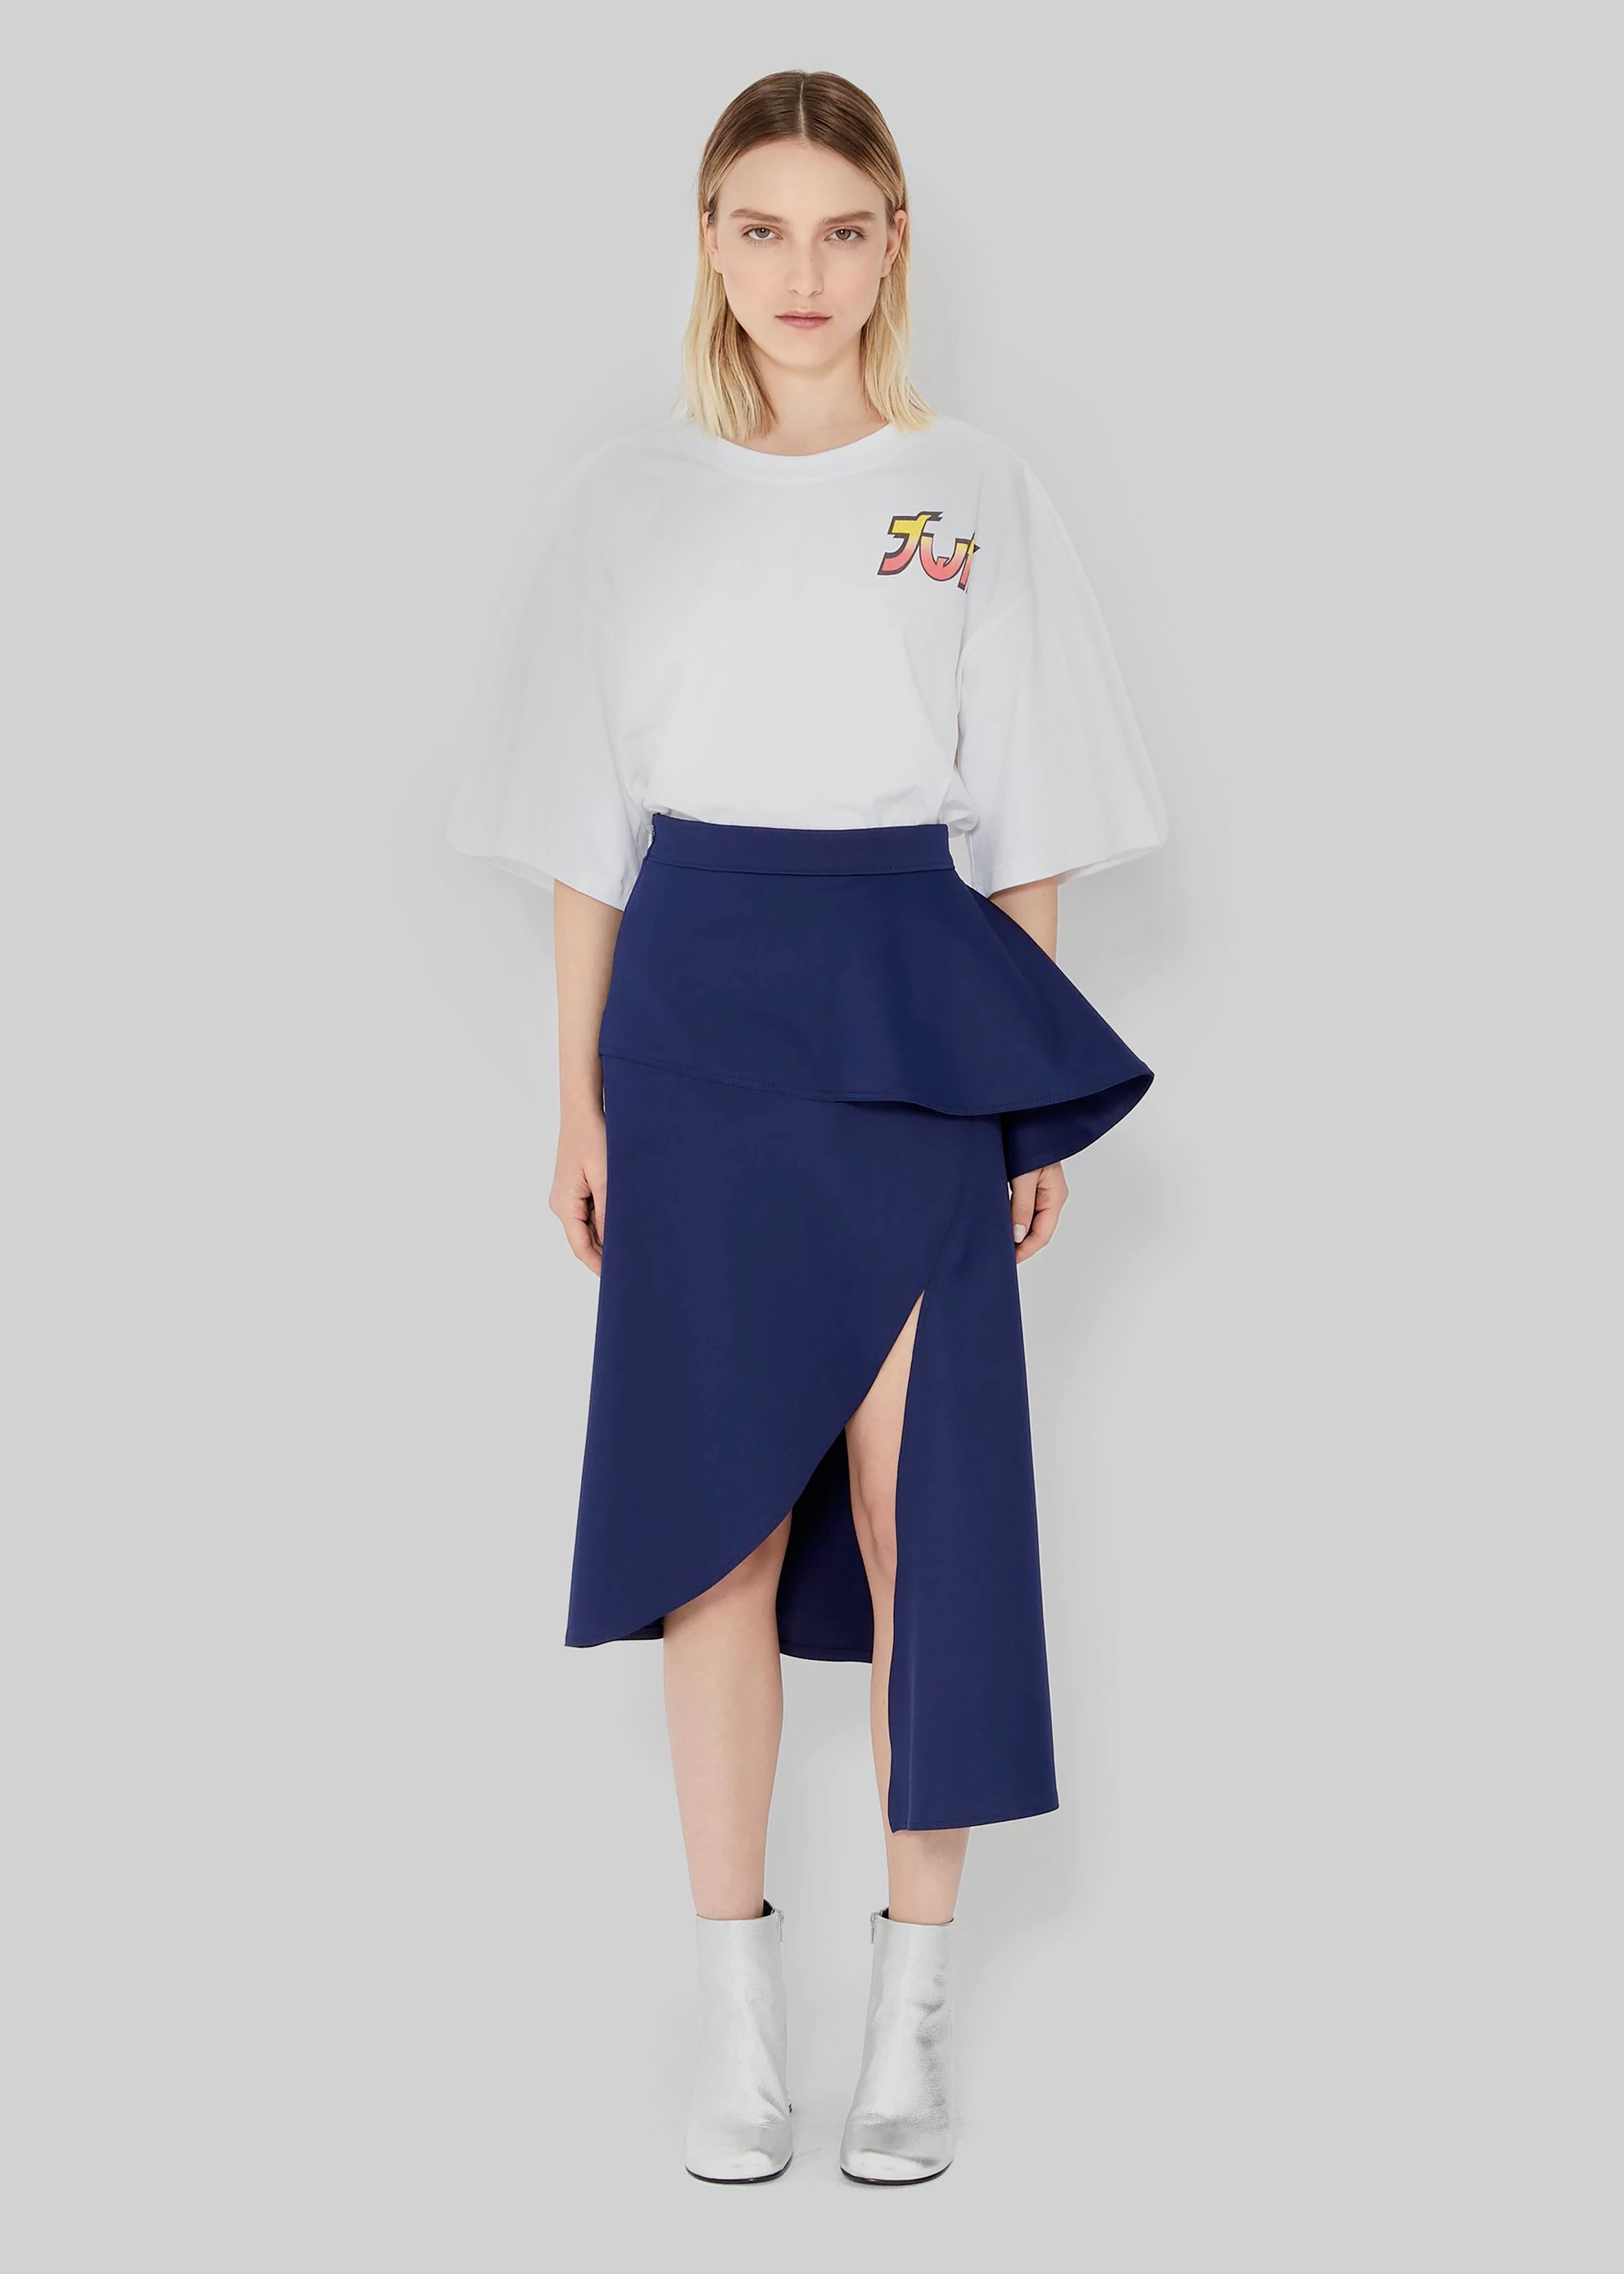 JW Anderson Peplum Slit Skirt - Oxford Blue - 3